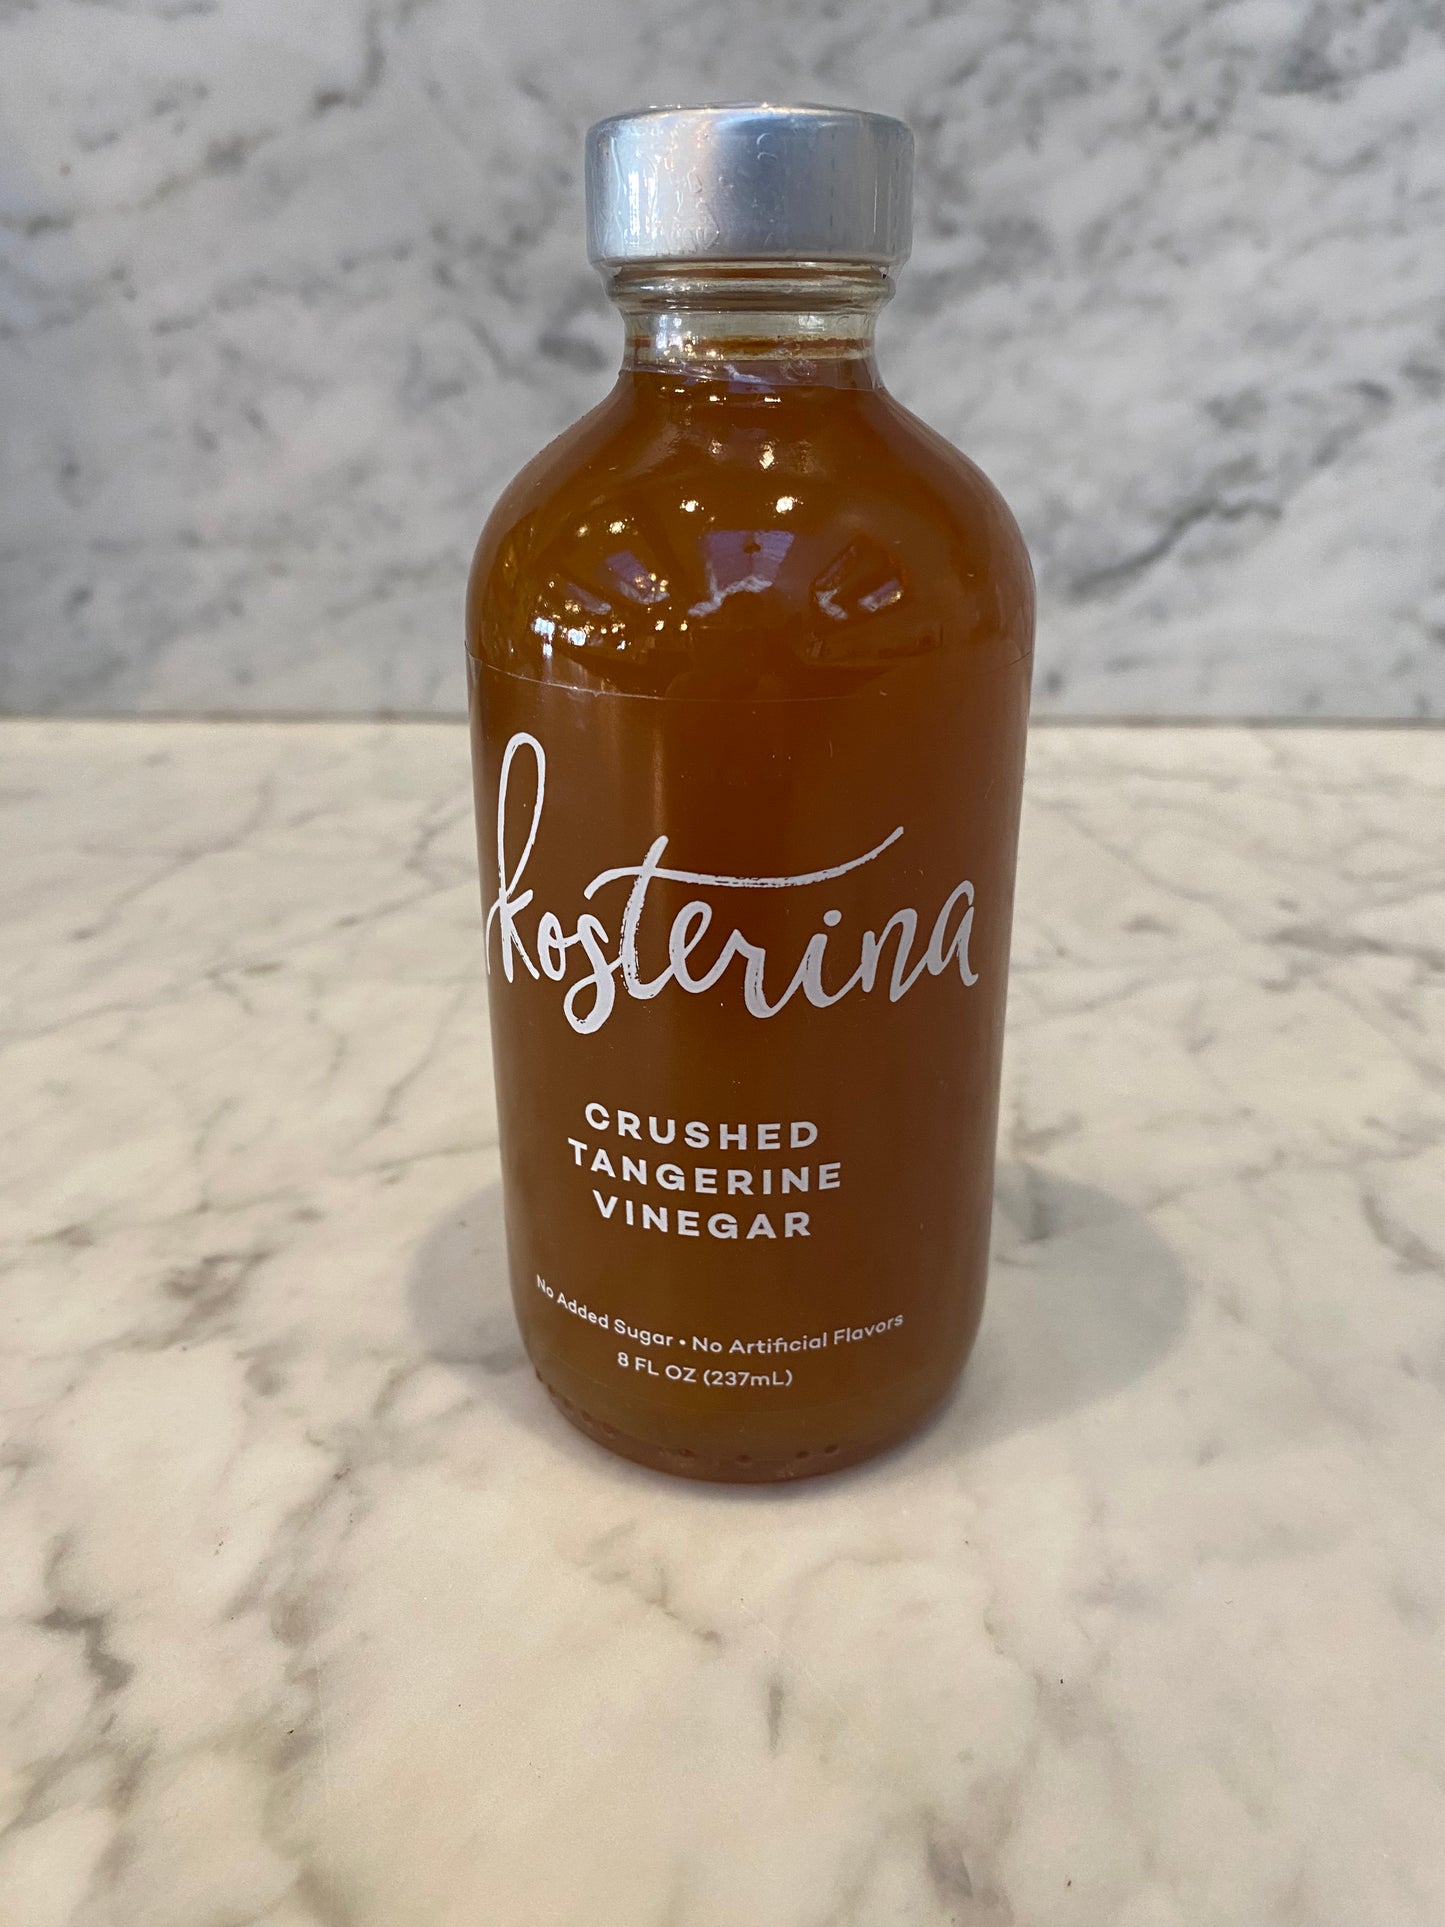 Kosterina Crushed Tangerine Vinegar